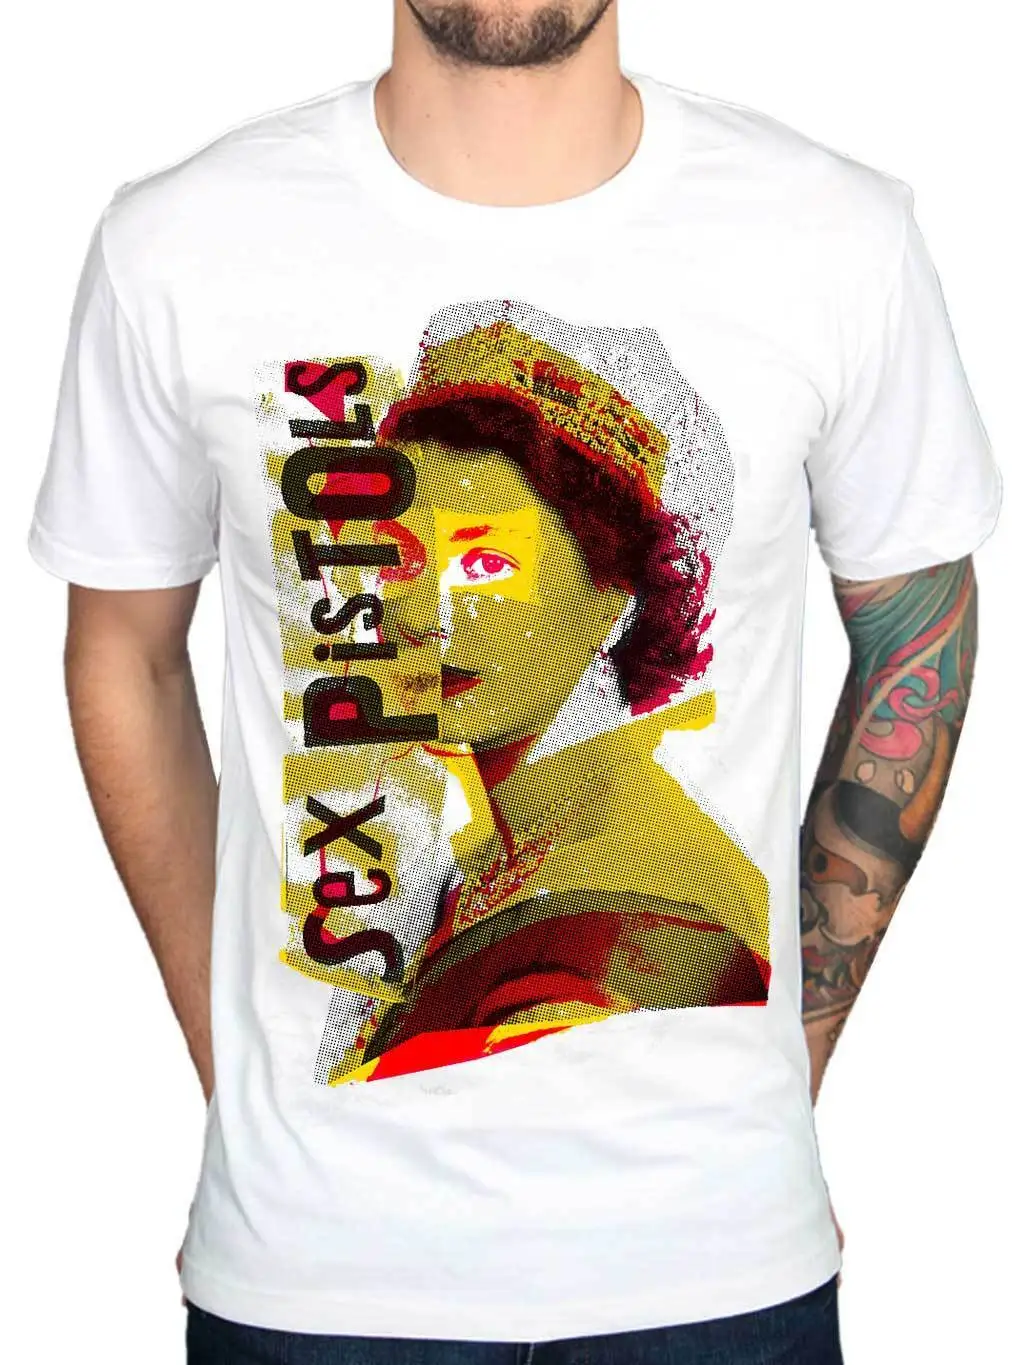 Oficialus Sex Pistols God Save The Queen T-Shirt Punk Rock Sid Vicious Lydon